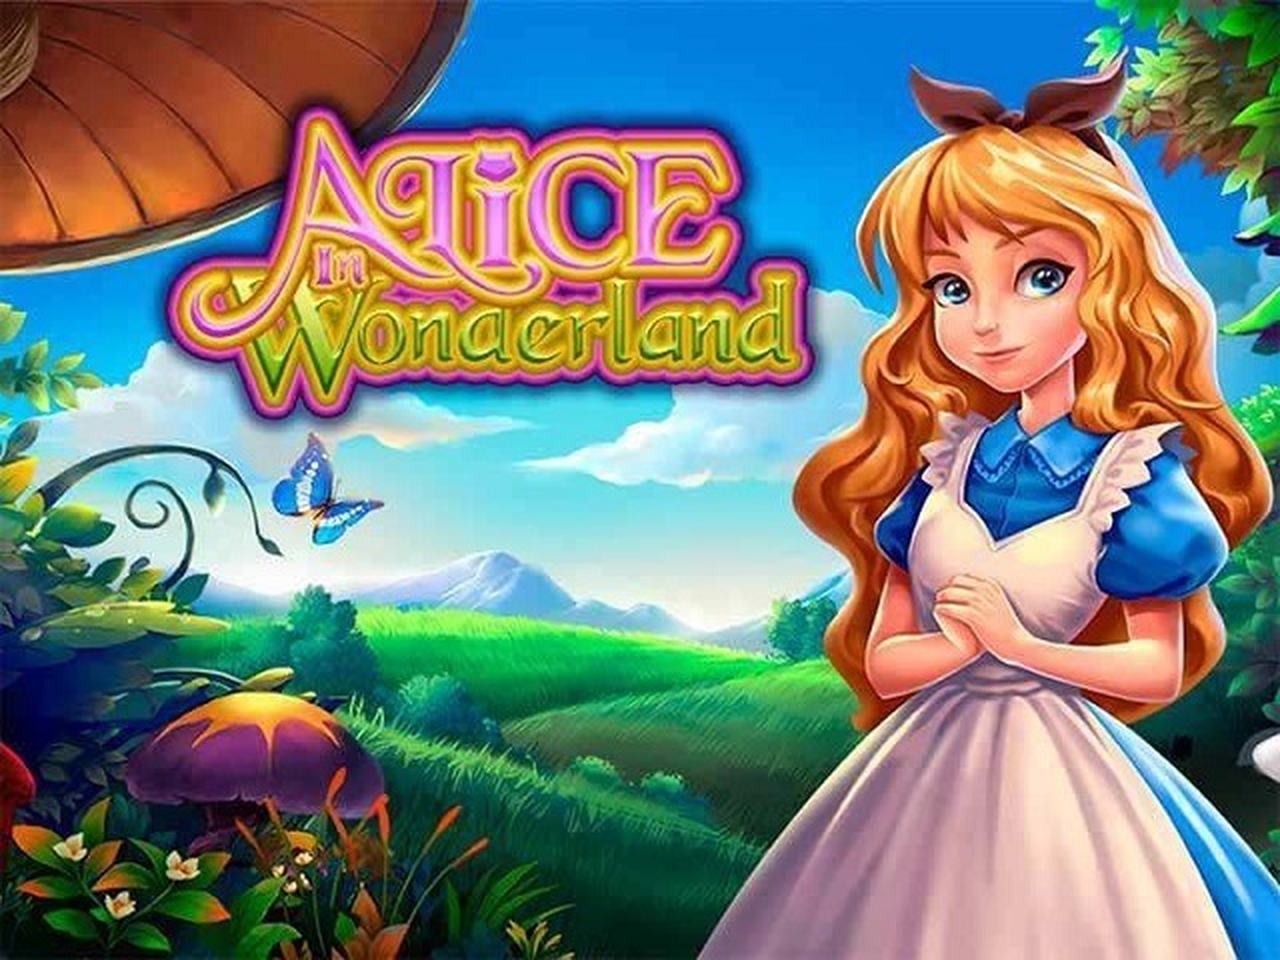 Alice in Wonderland demo